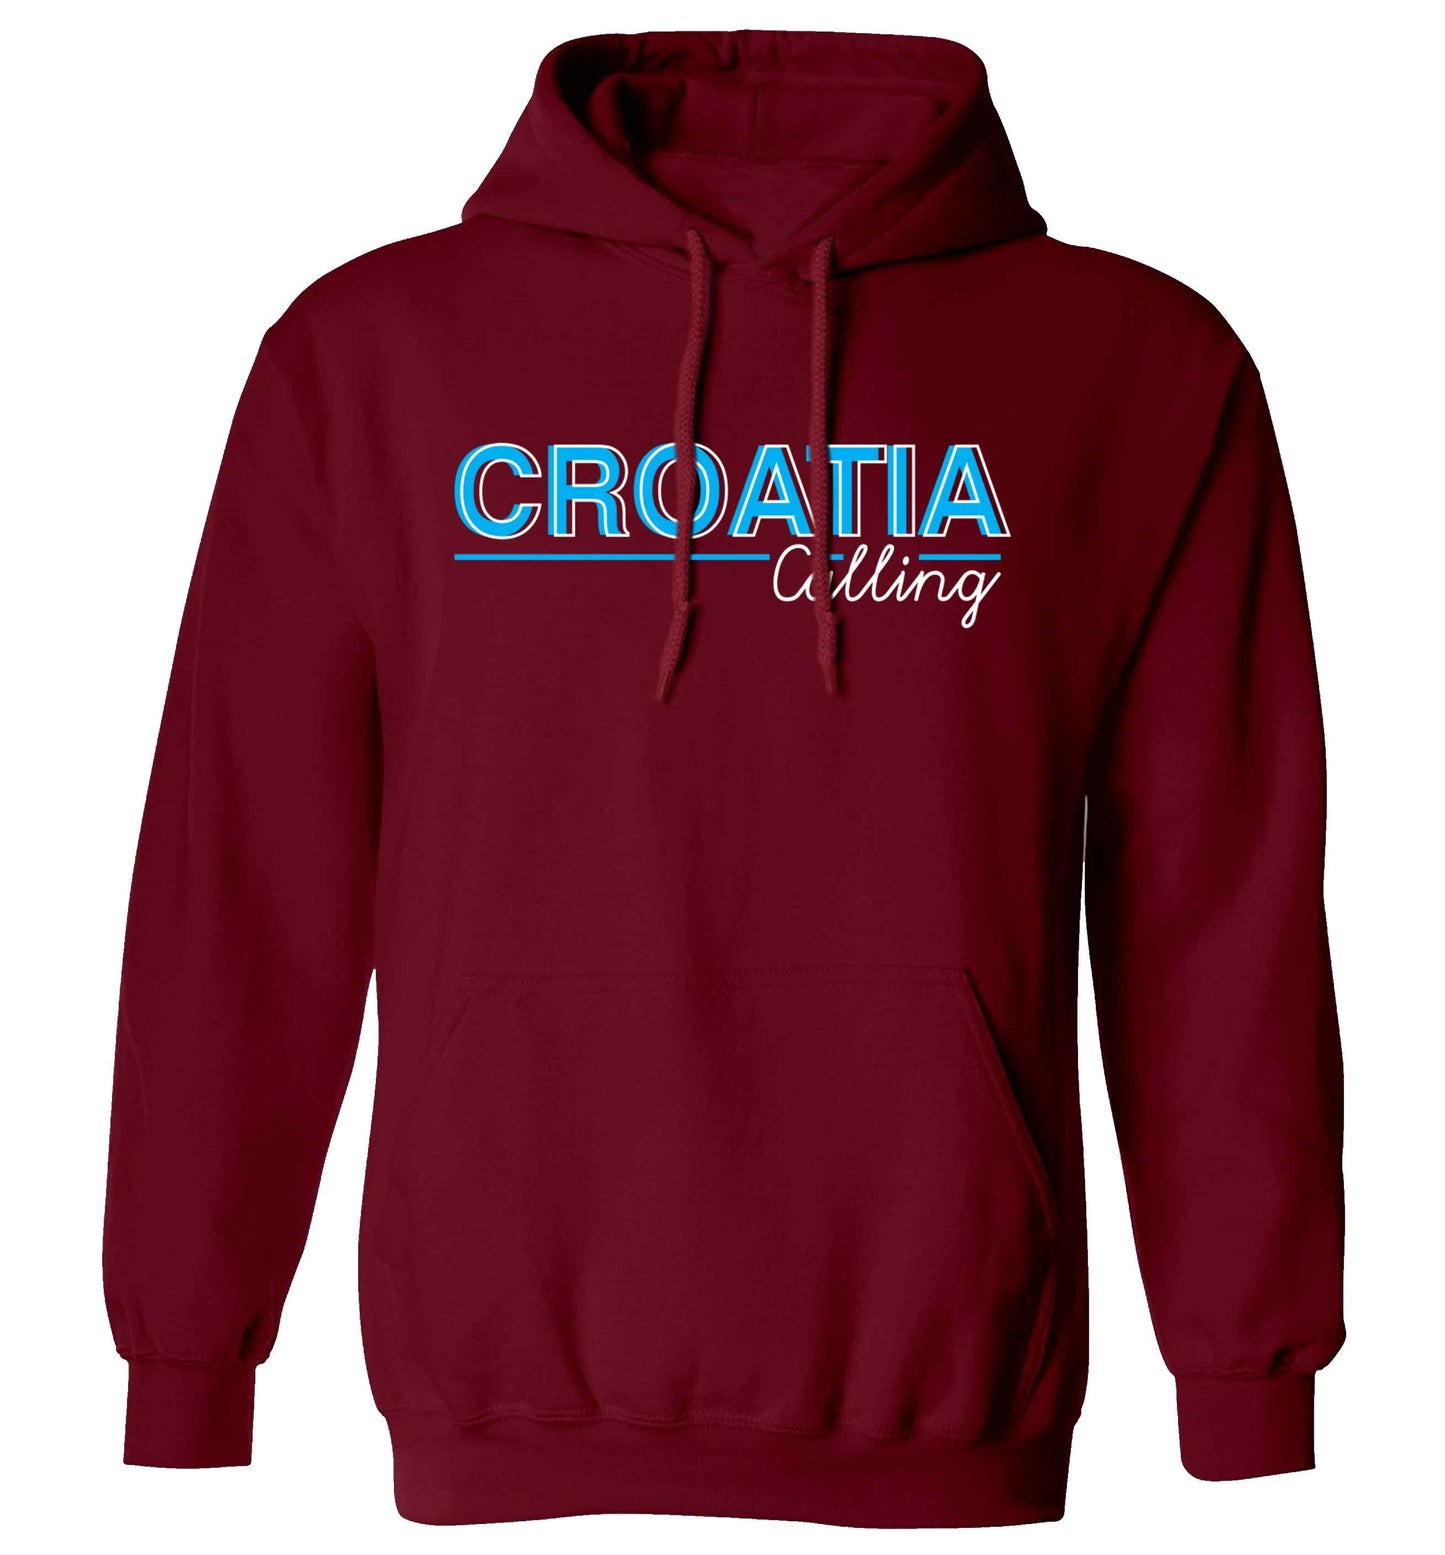 Croatia calling adults unisex maroon hoodie 2XL